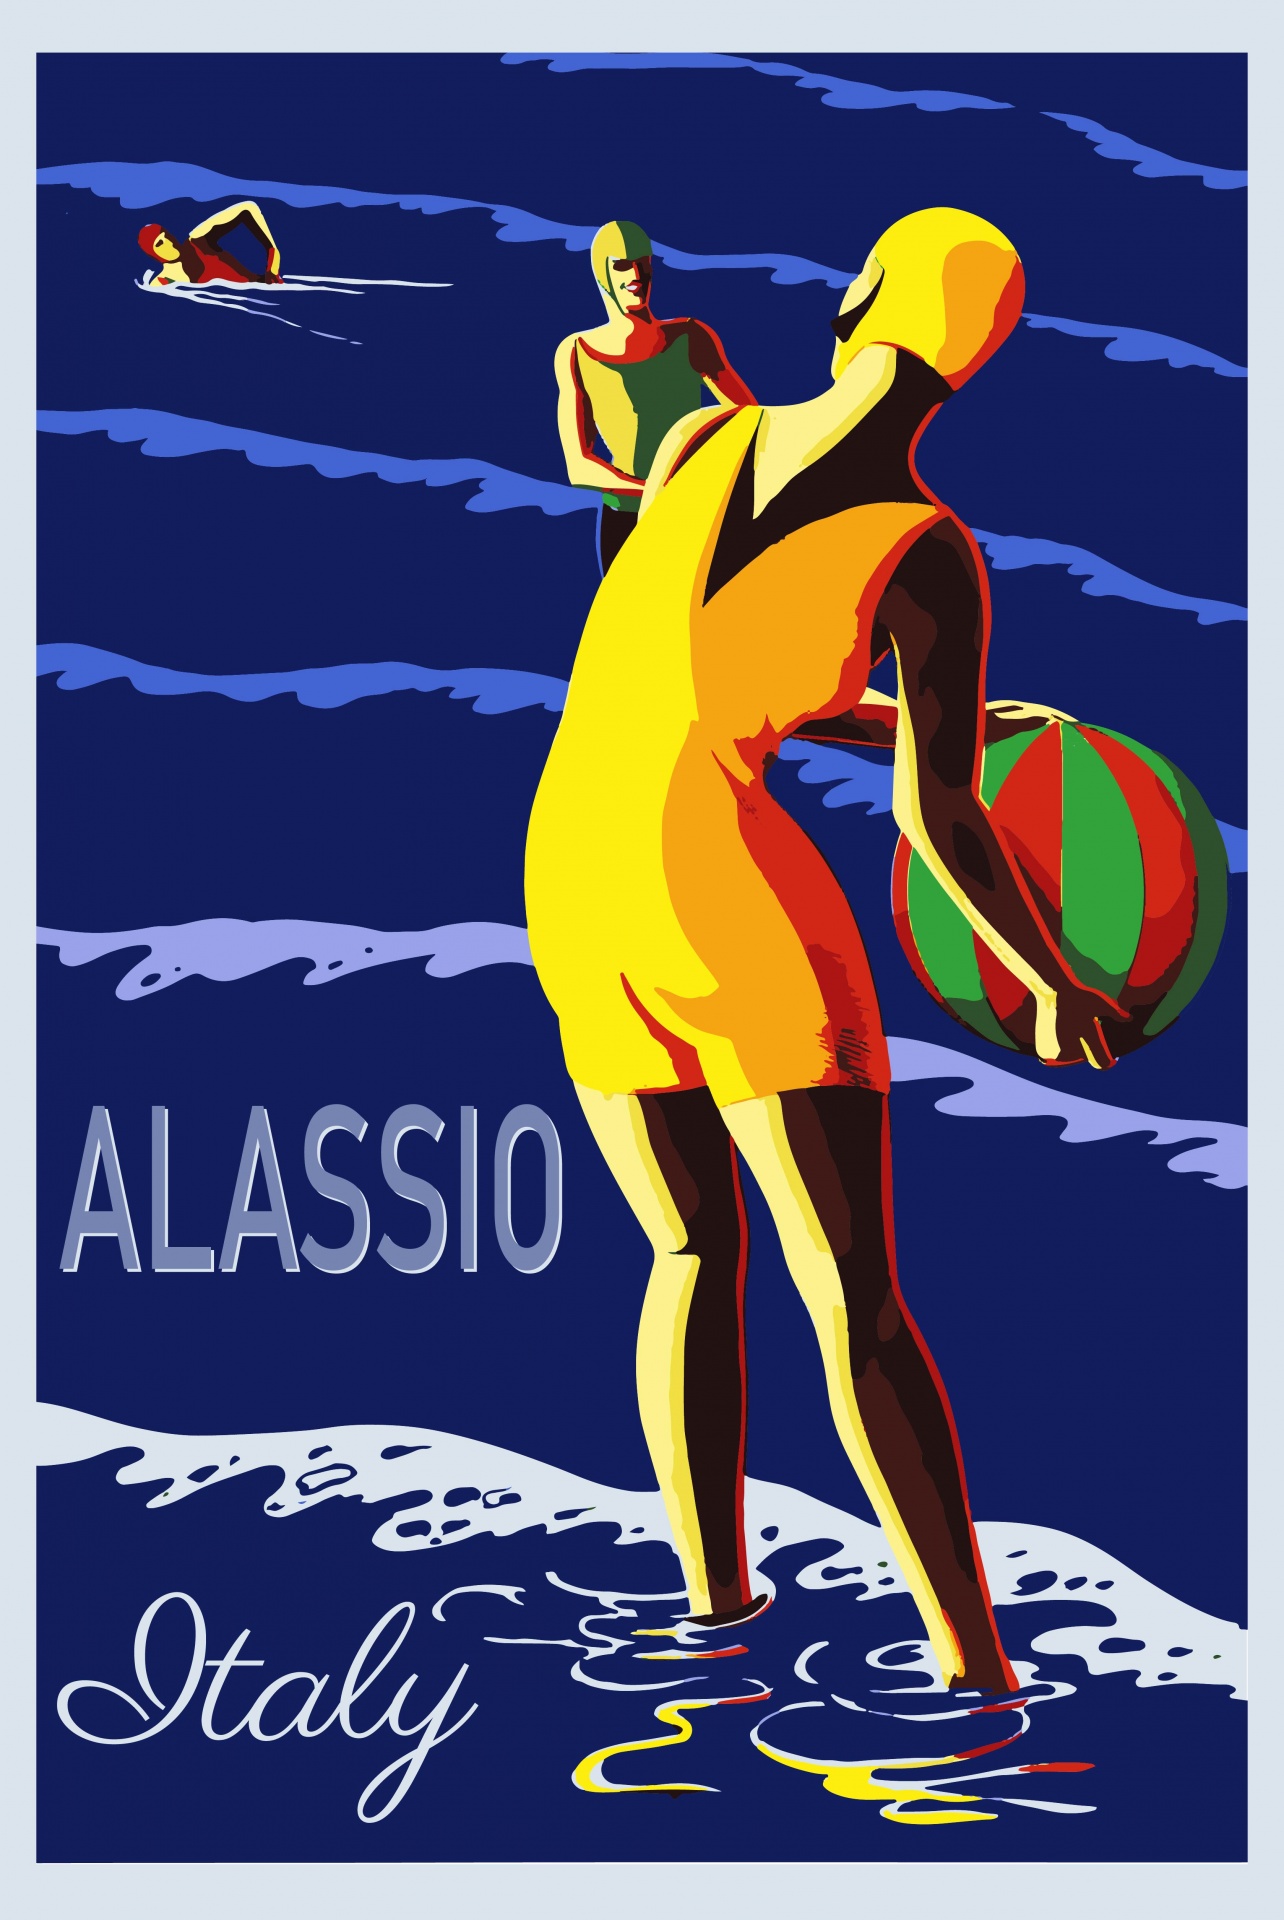 Italy, Alassio Travel Poster